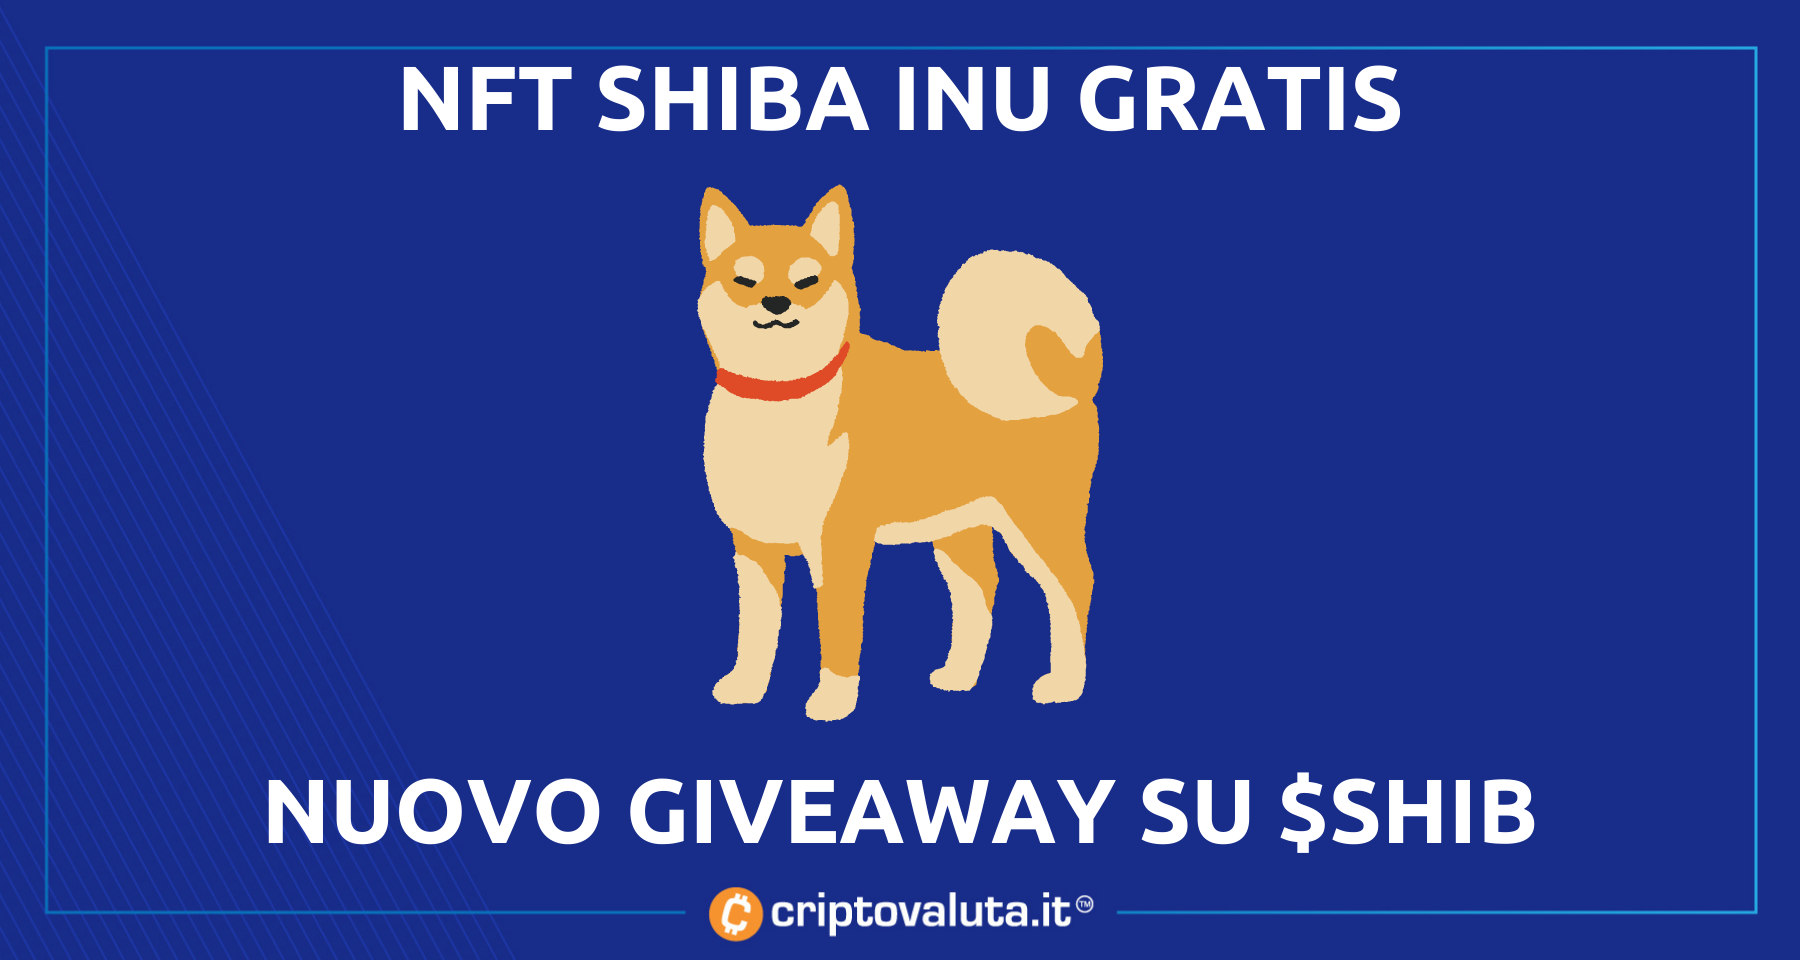 NFT Shiba Inu Gratis | Arriva un nuovo Giveaway su Twitter